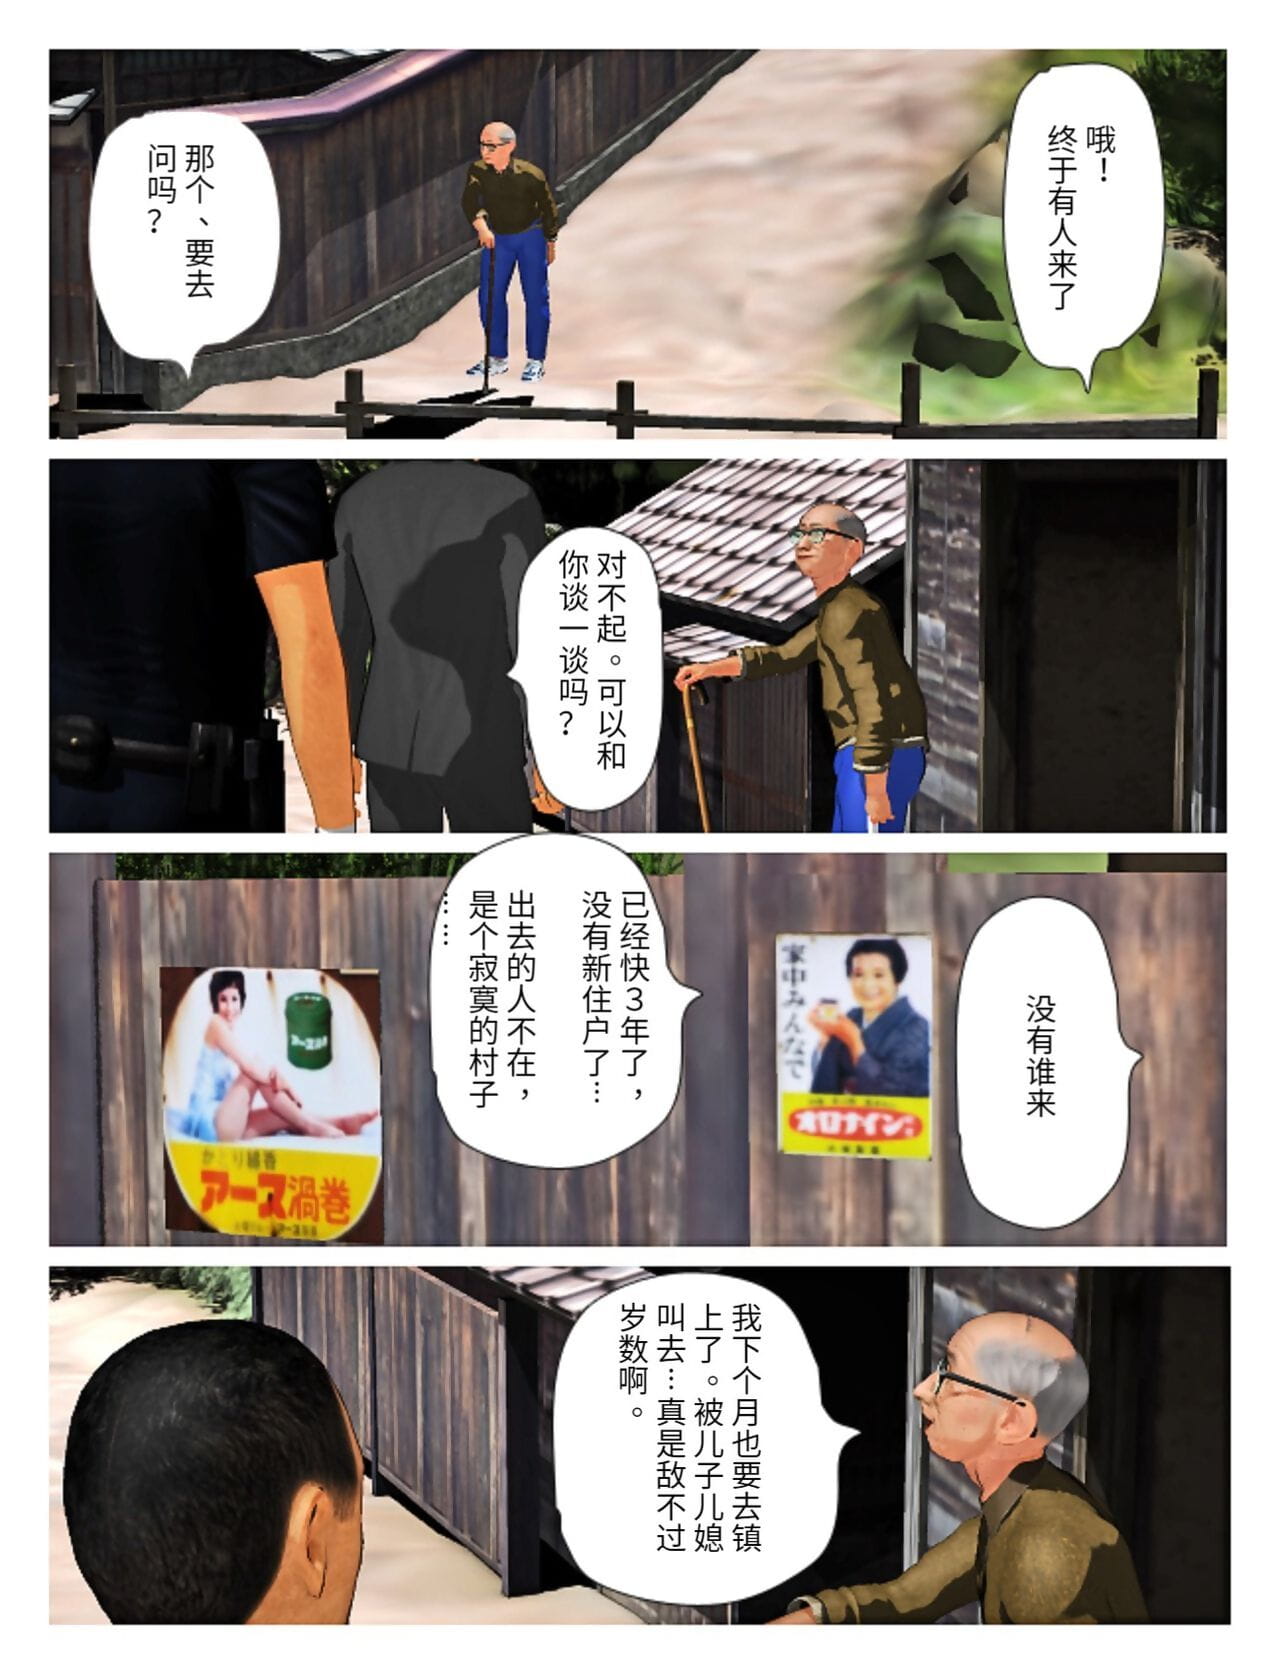 Kyou không misako san 2019:4 phần 3 page 1